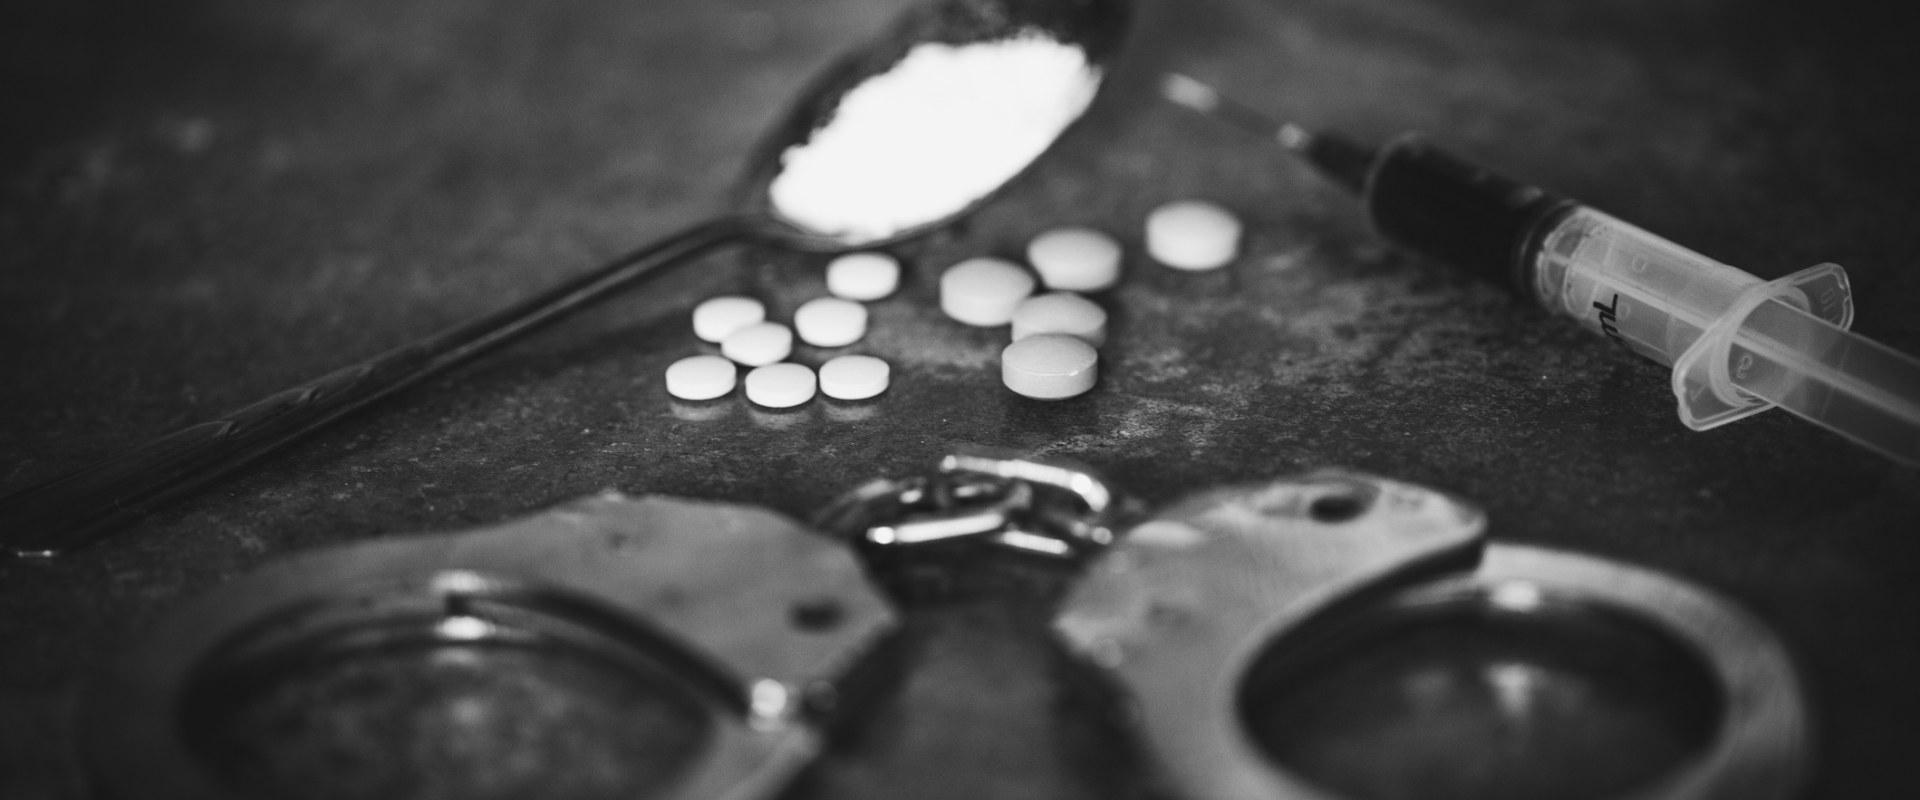 Is possession of drug paraphernalia a criminal offense?